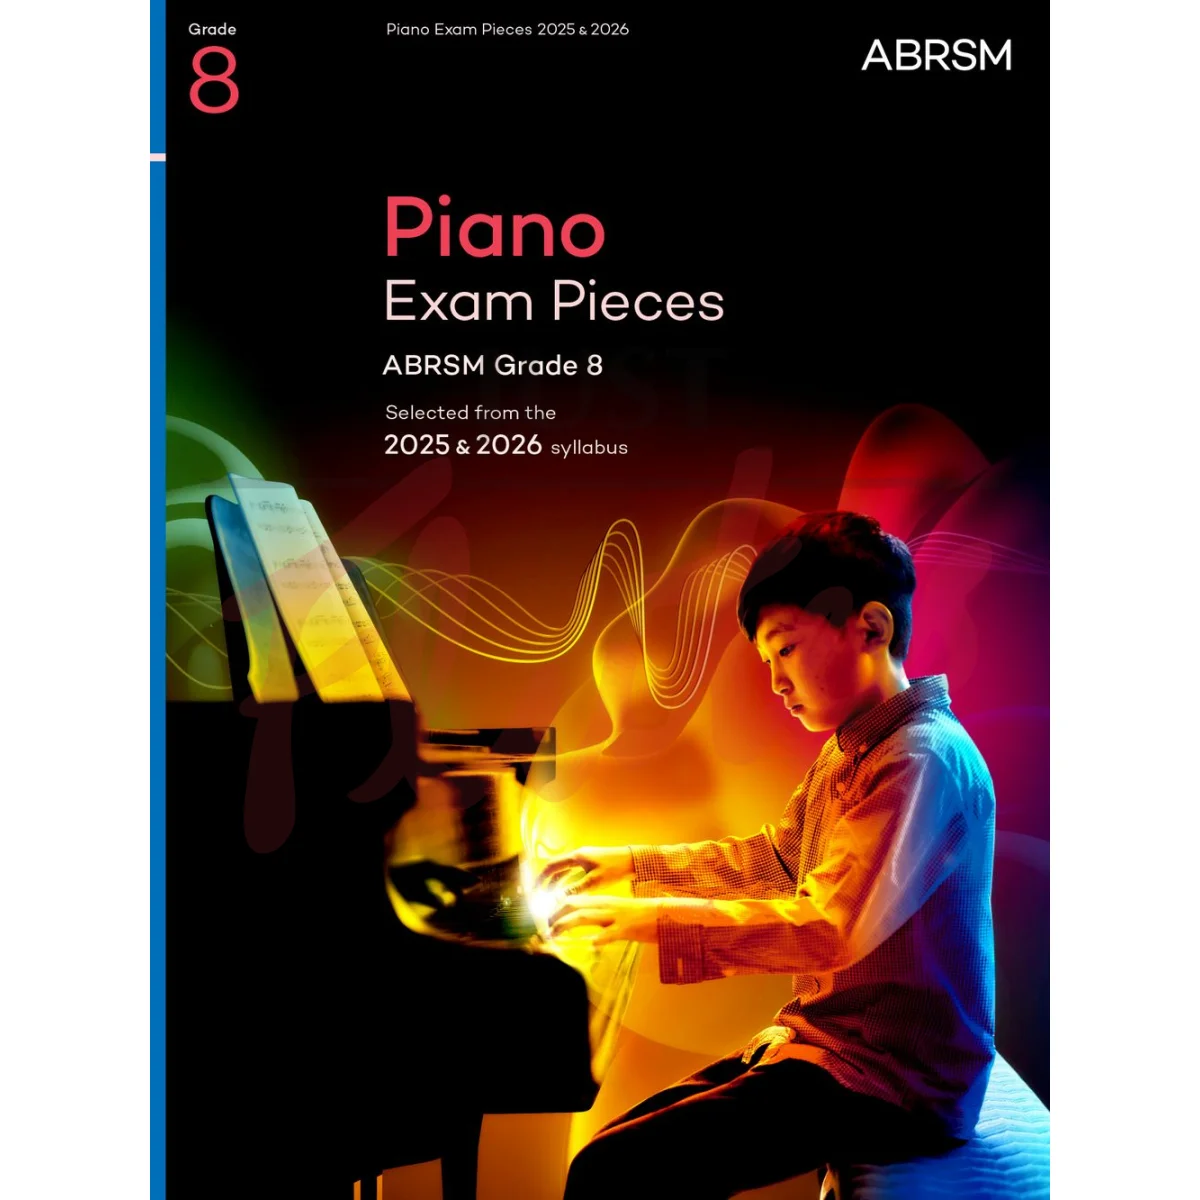 Piano Exam Pieces 2025-26, Grade 8